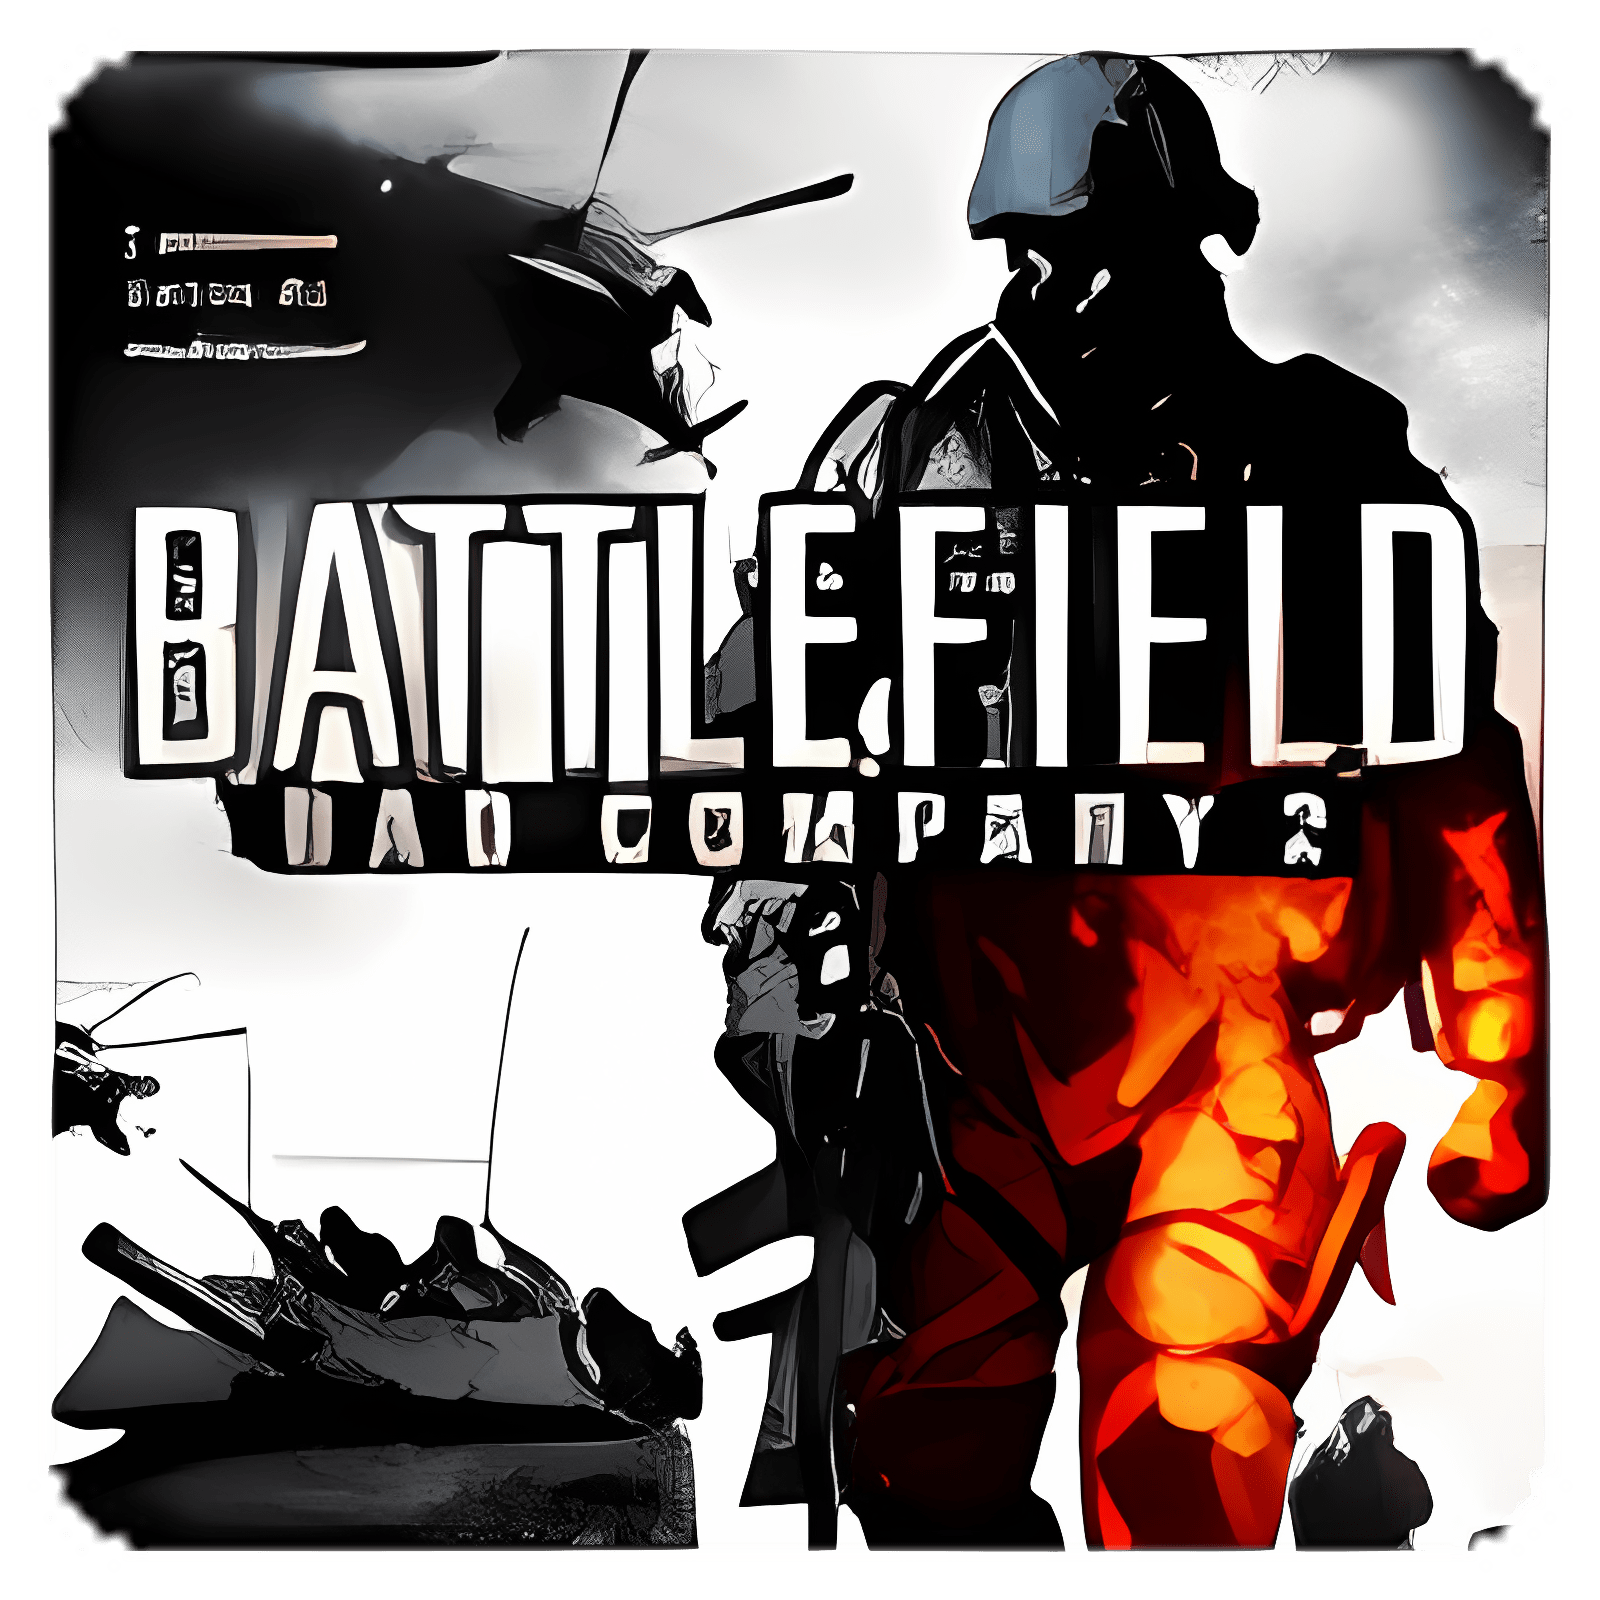 battlefield bad company 2 campaign length